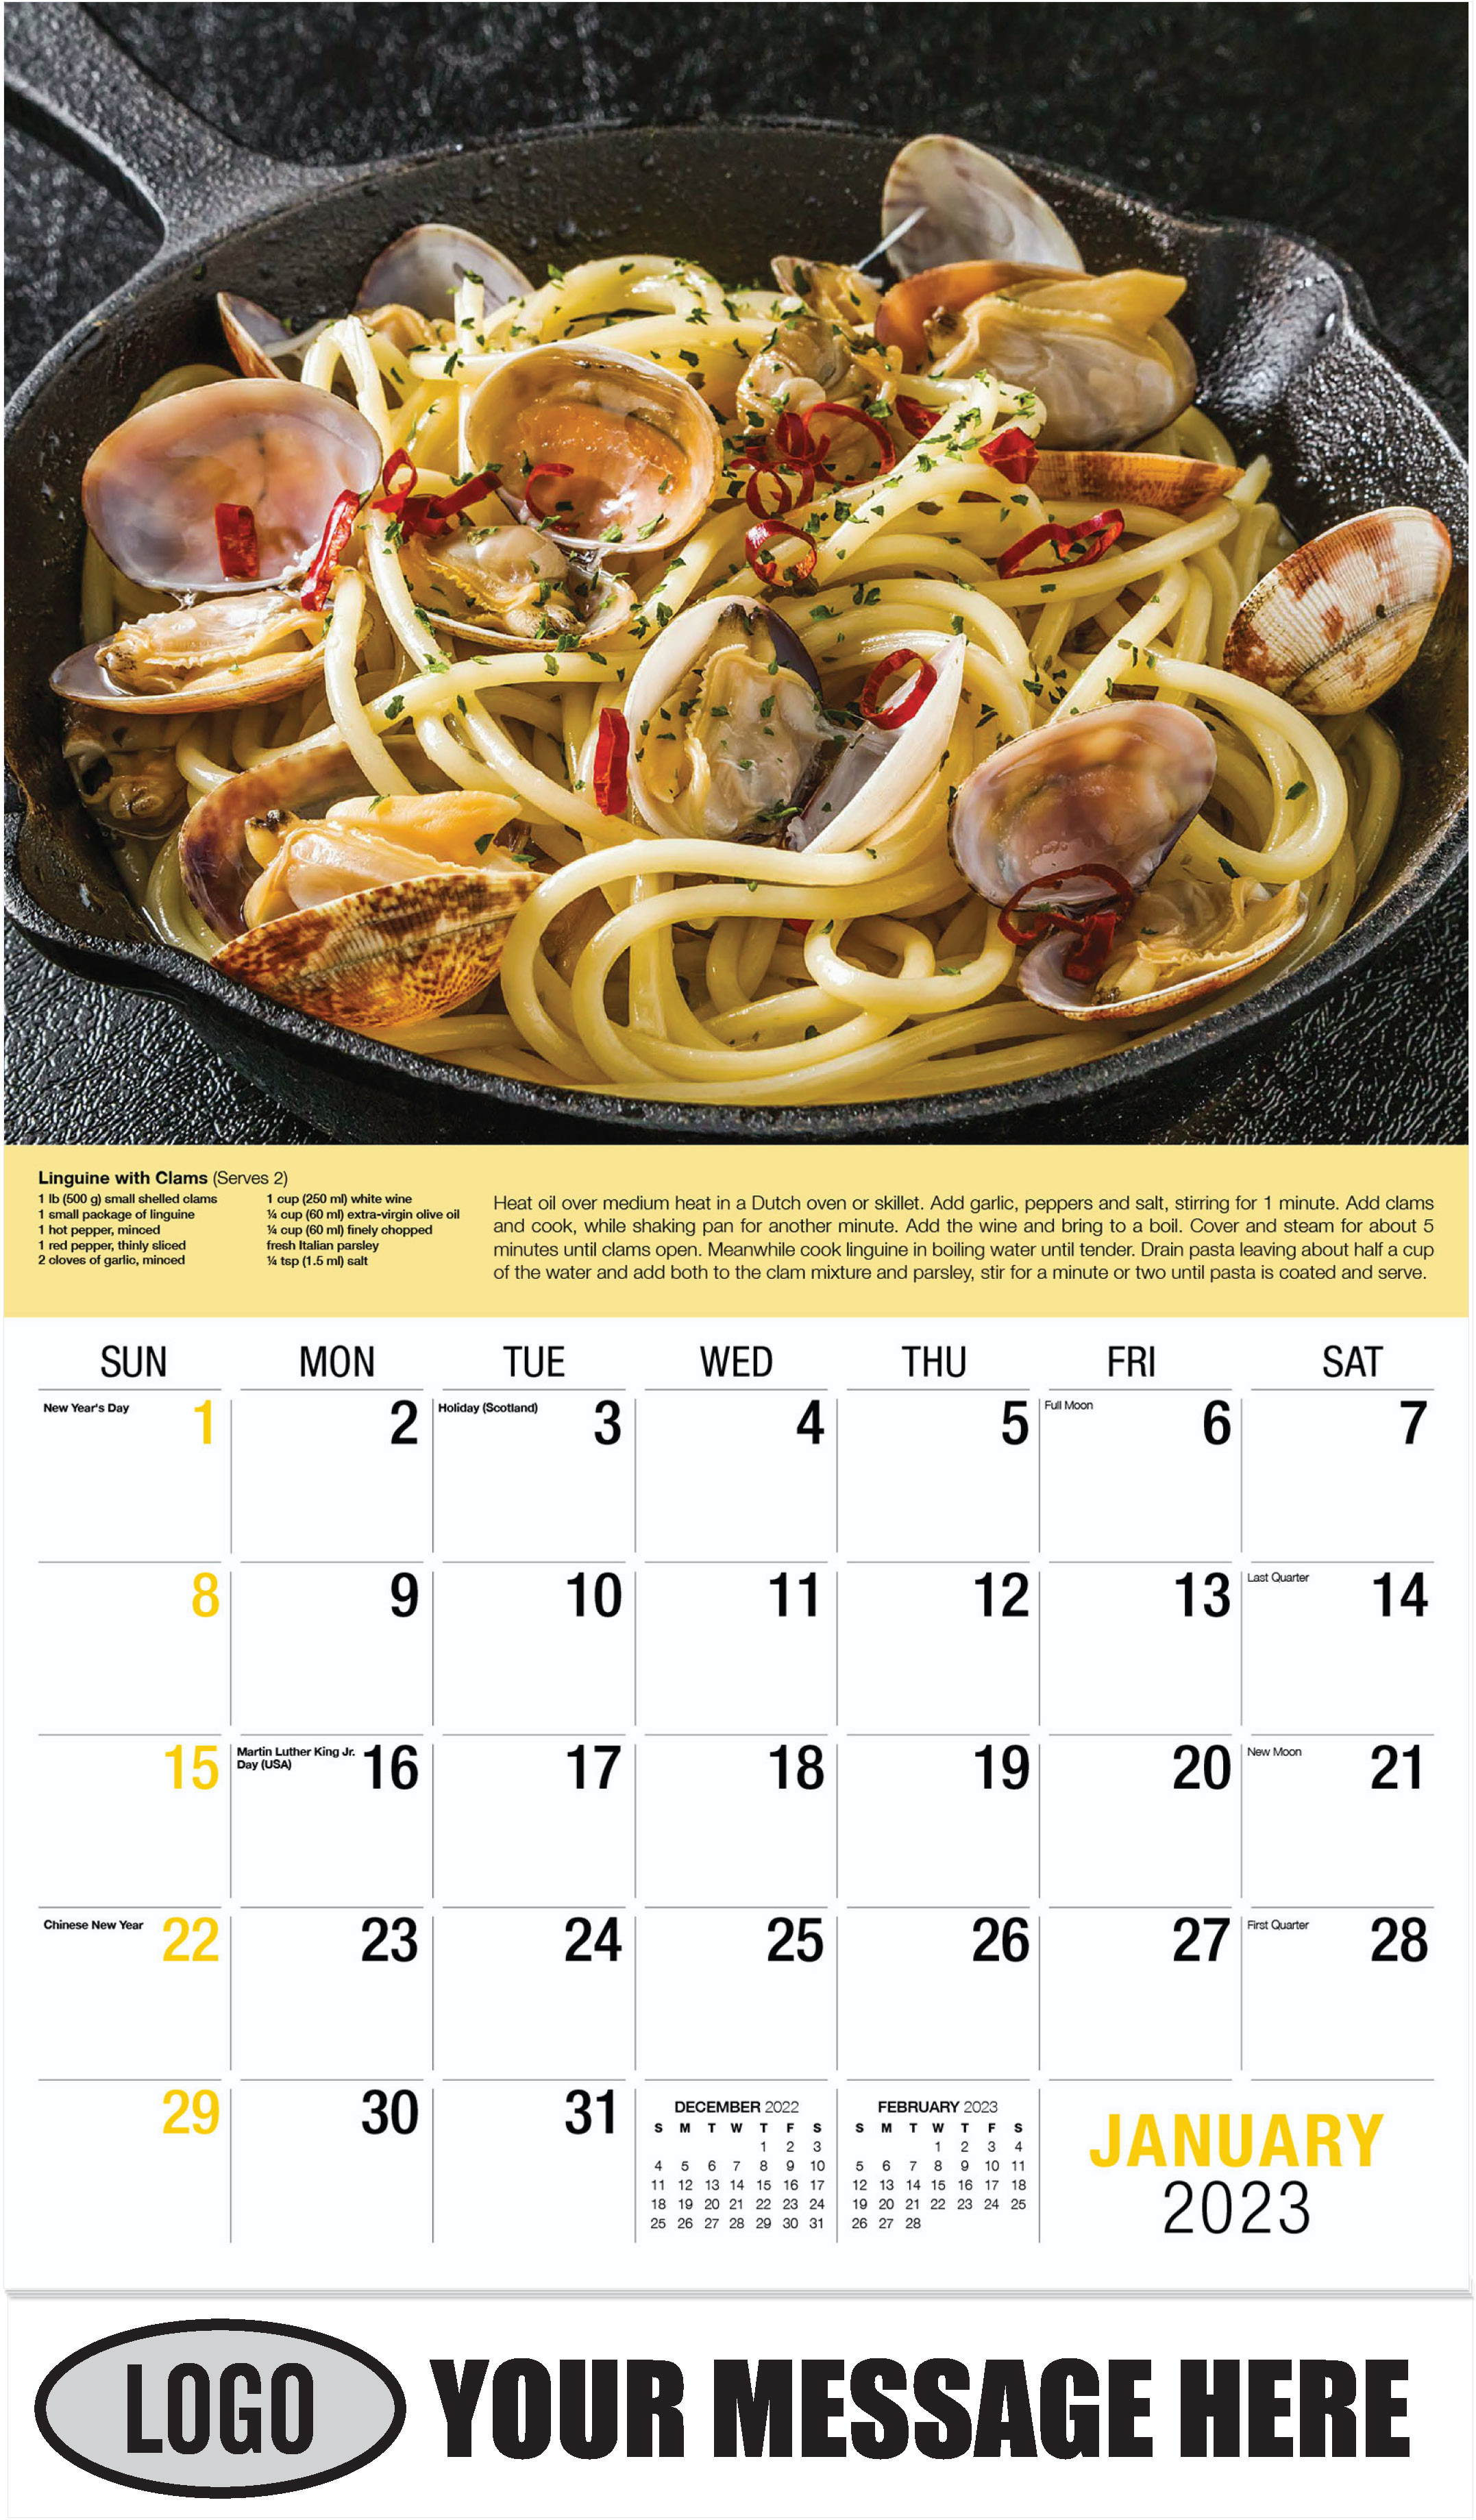 January - Recipes 2023 Promotional Calendar